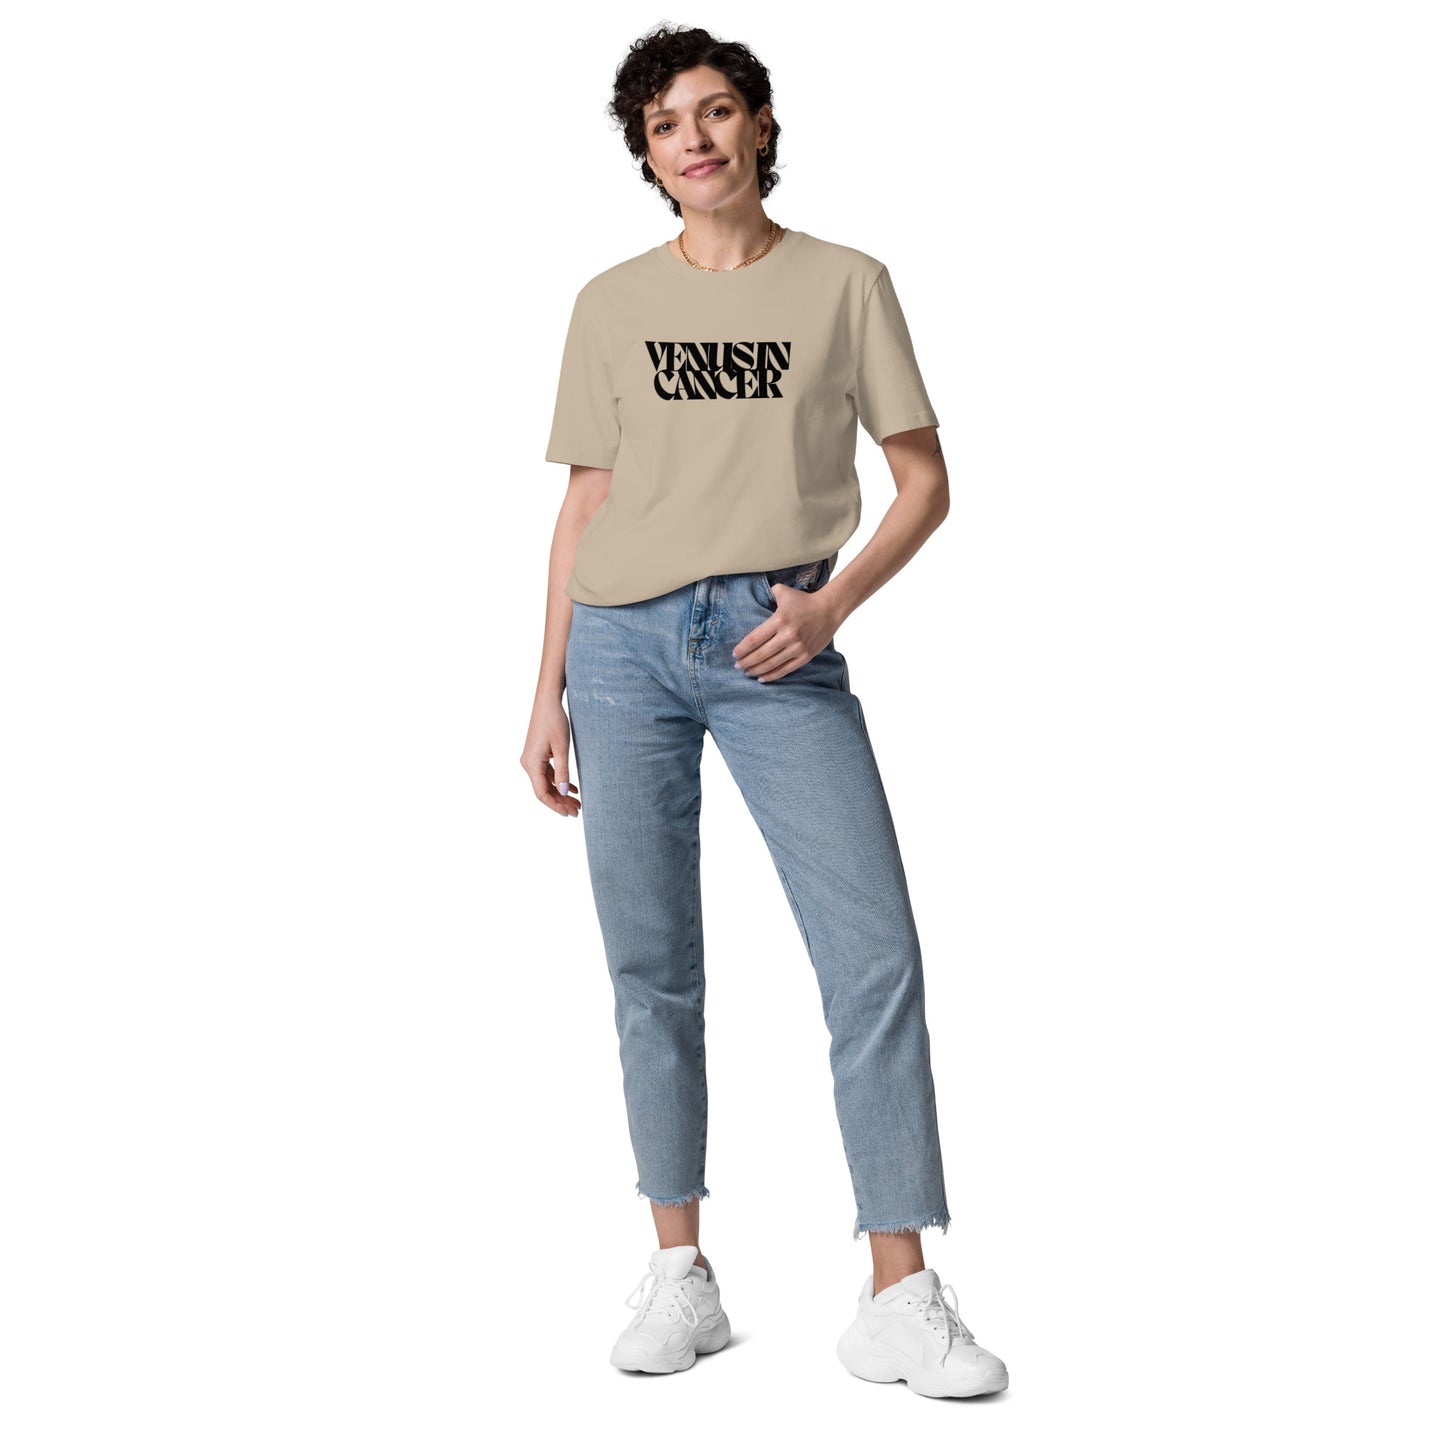 venus in cancer organic cotton t-shirt